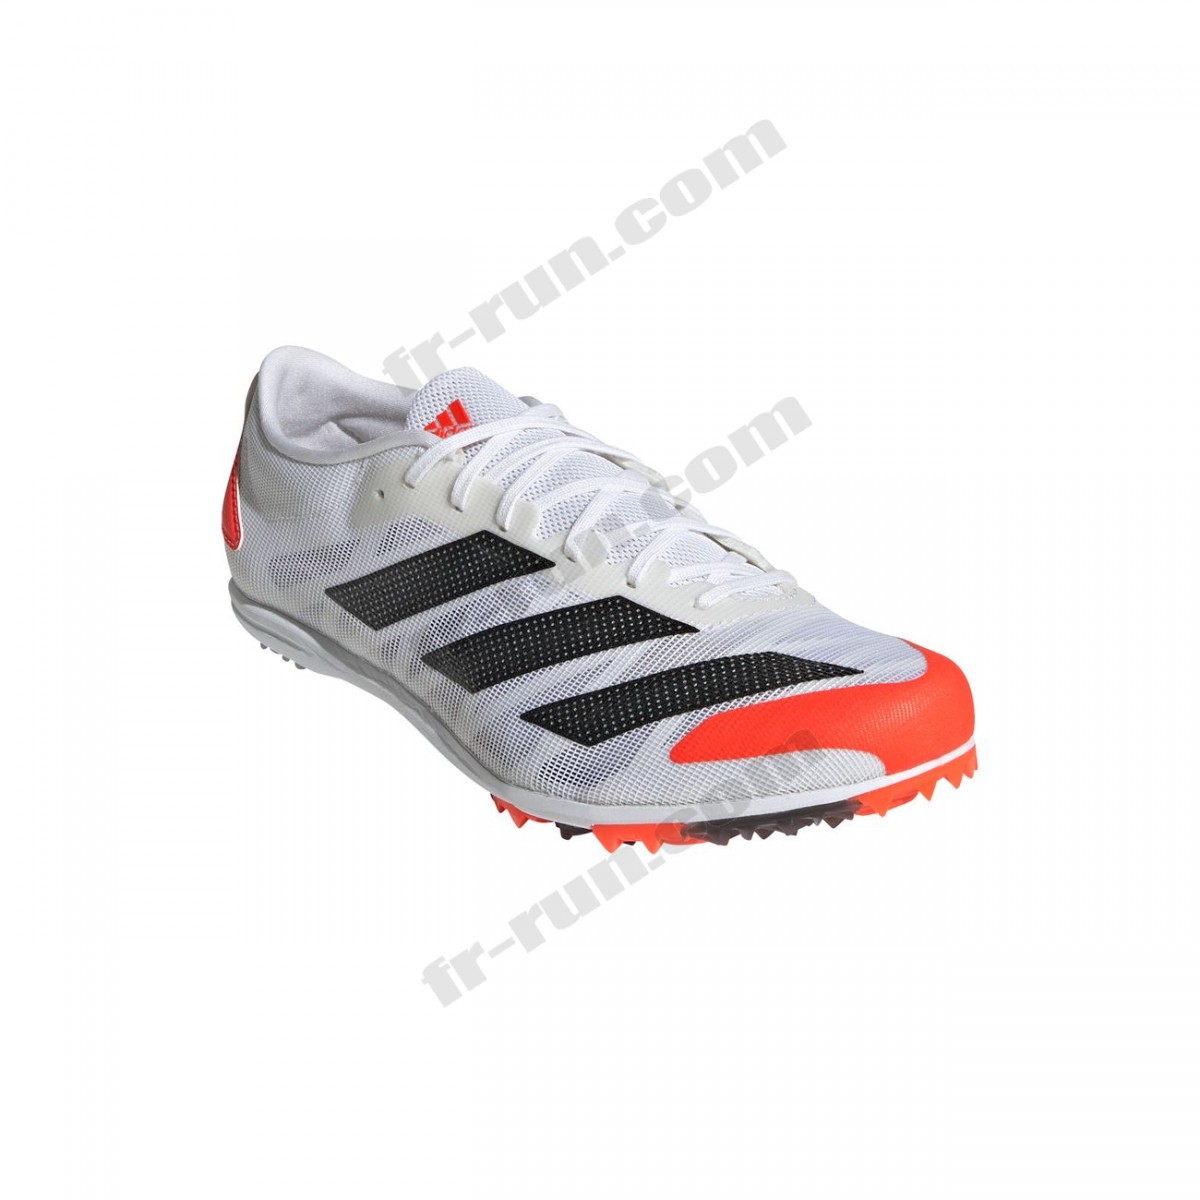 Adidas/Athlétisme adulte ADIDAS Chaussures adidas Adizero XCS √ Nouveau style √ Soldes - -8